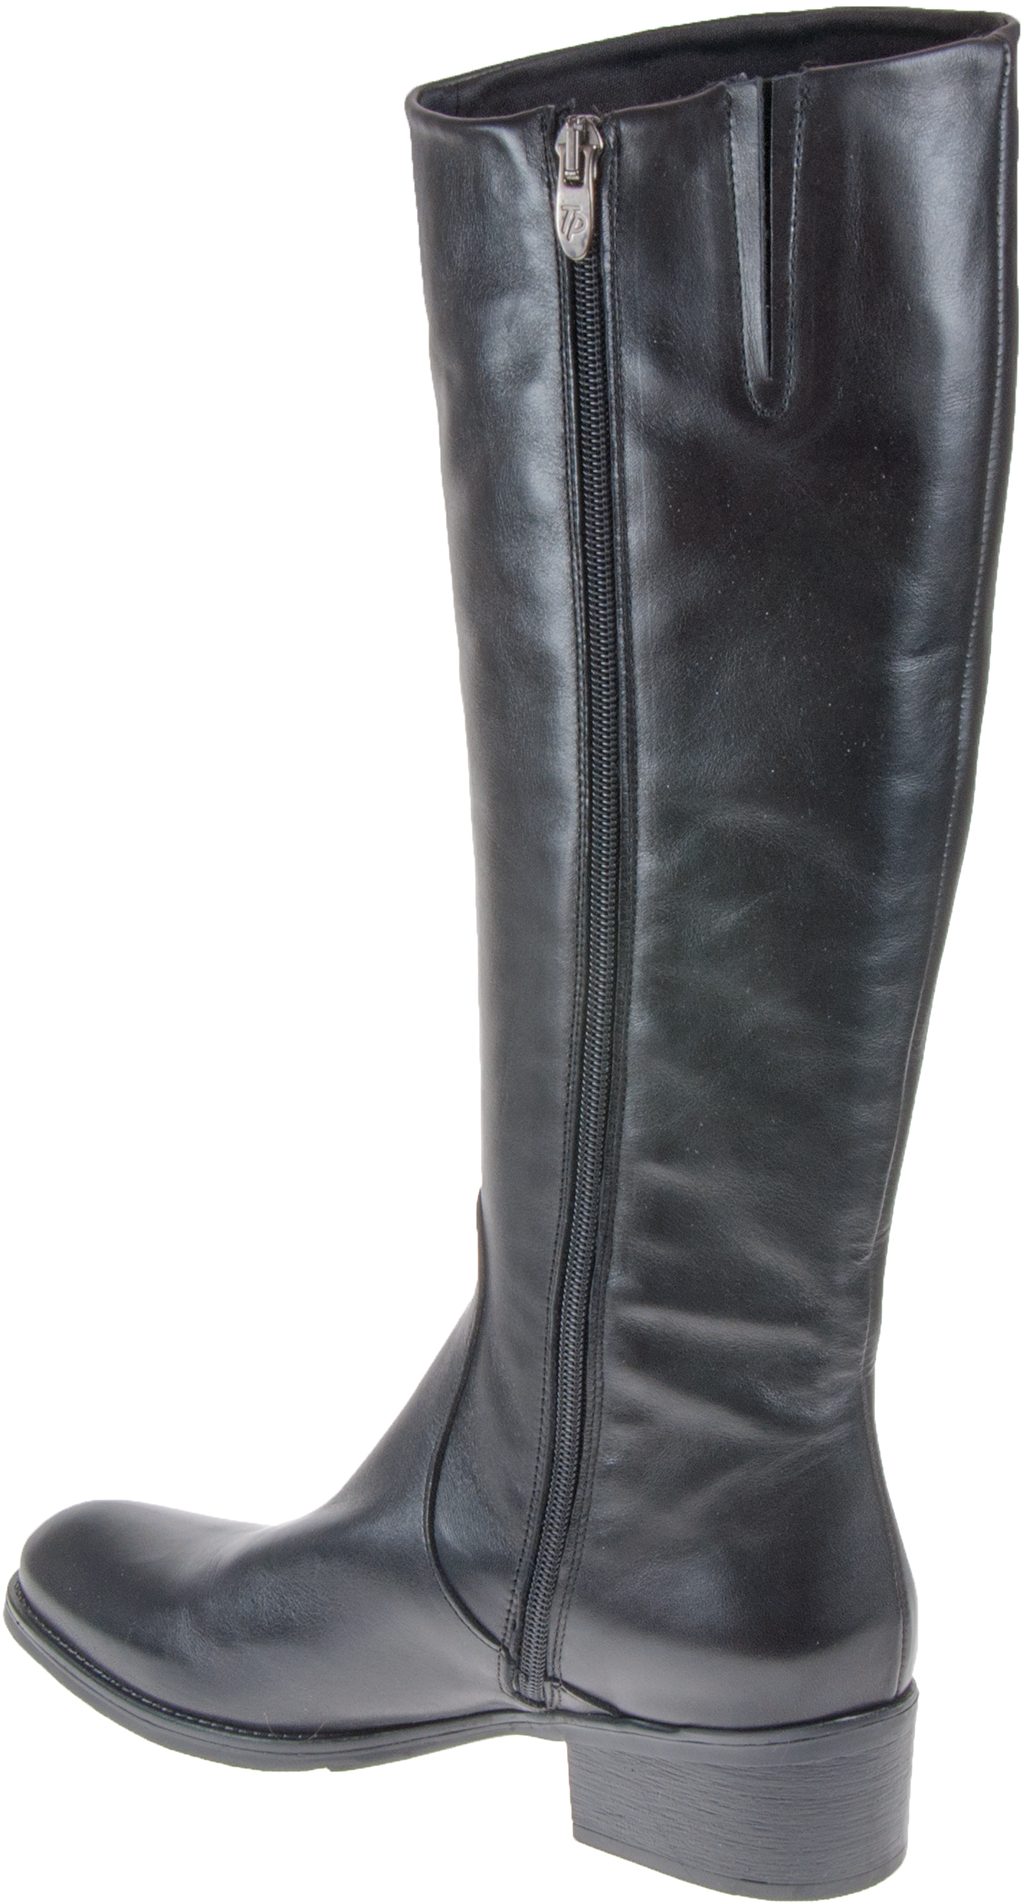 Toni Pons Tirol Black Leather tir - Knee High Boots - Humphries Shoes